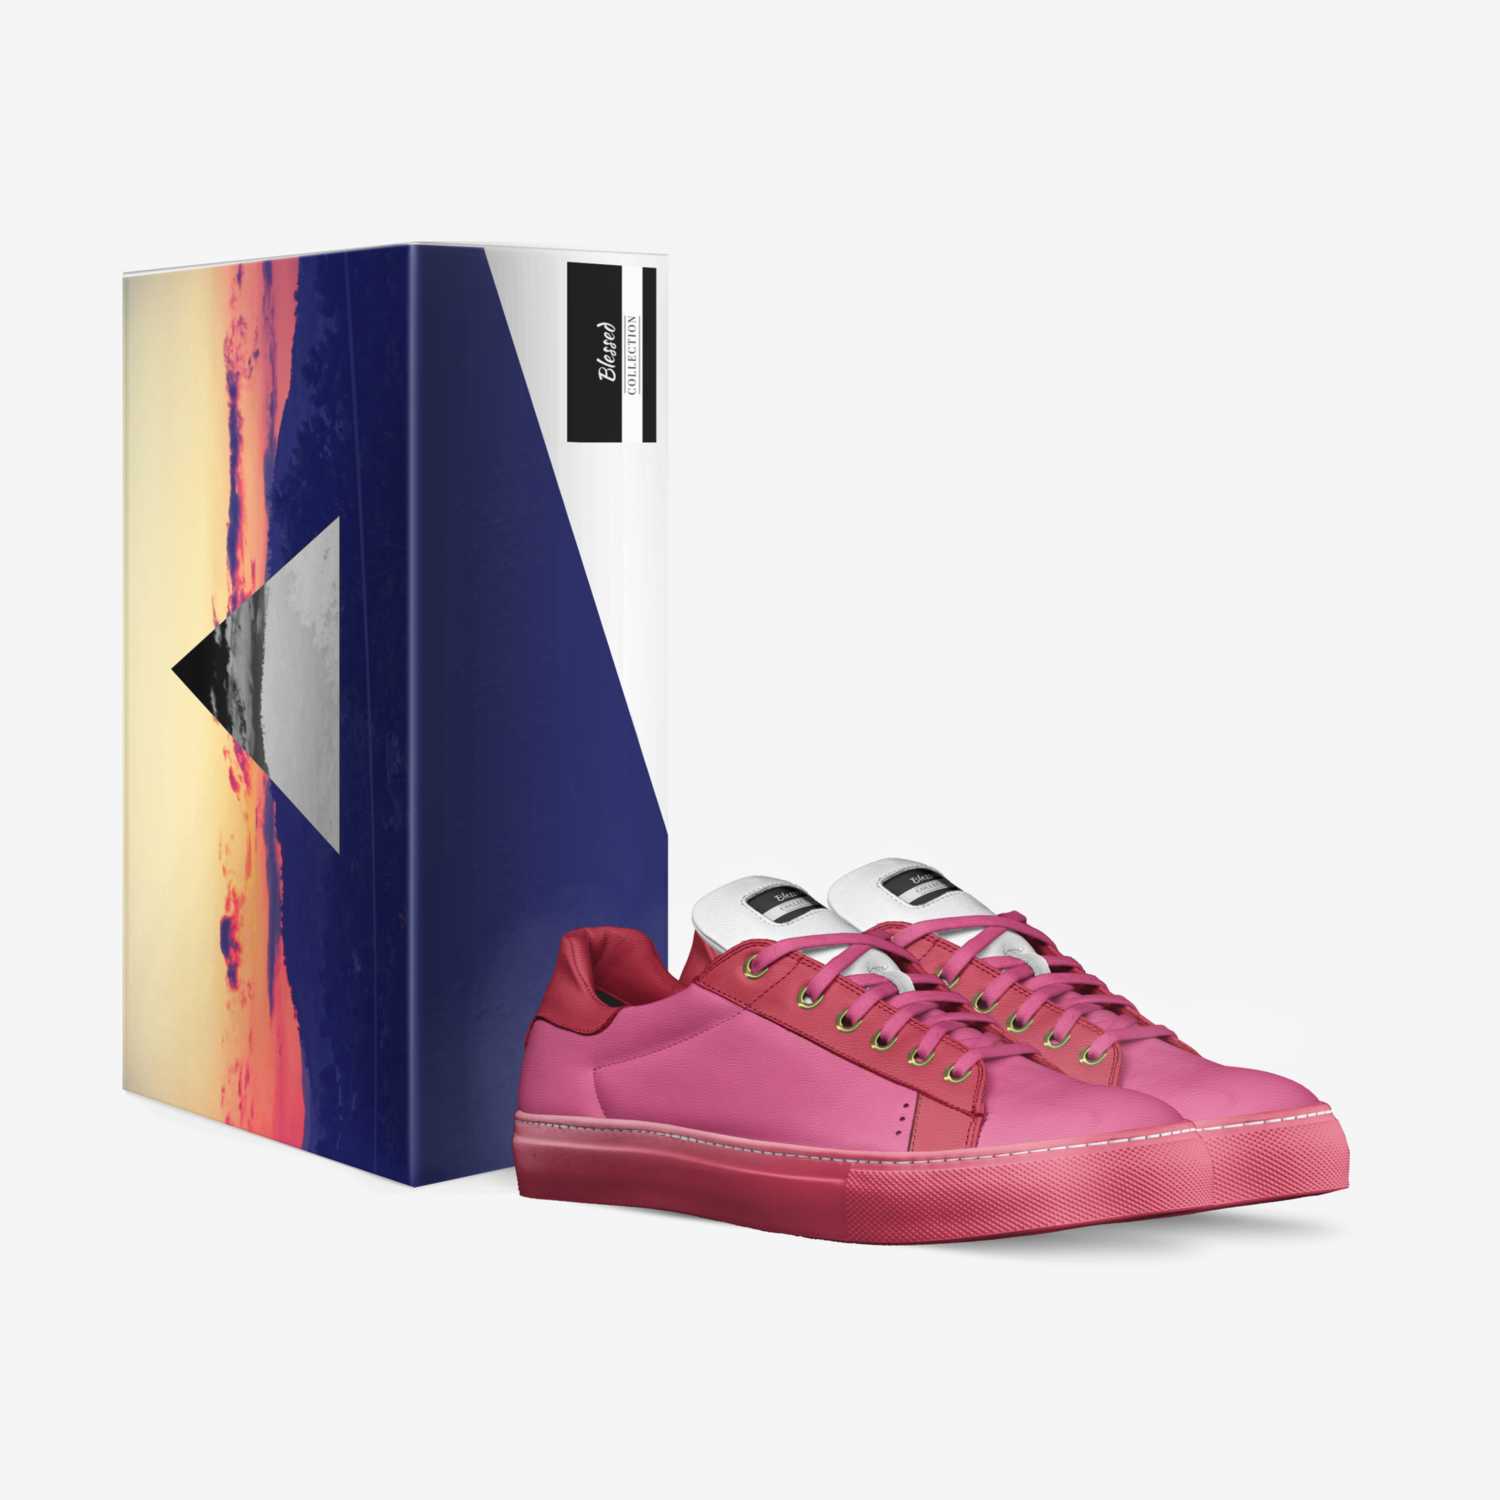 Deniesha_slay custom made in Italy shoes by Deniesha Hill | Box view